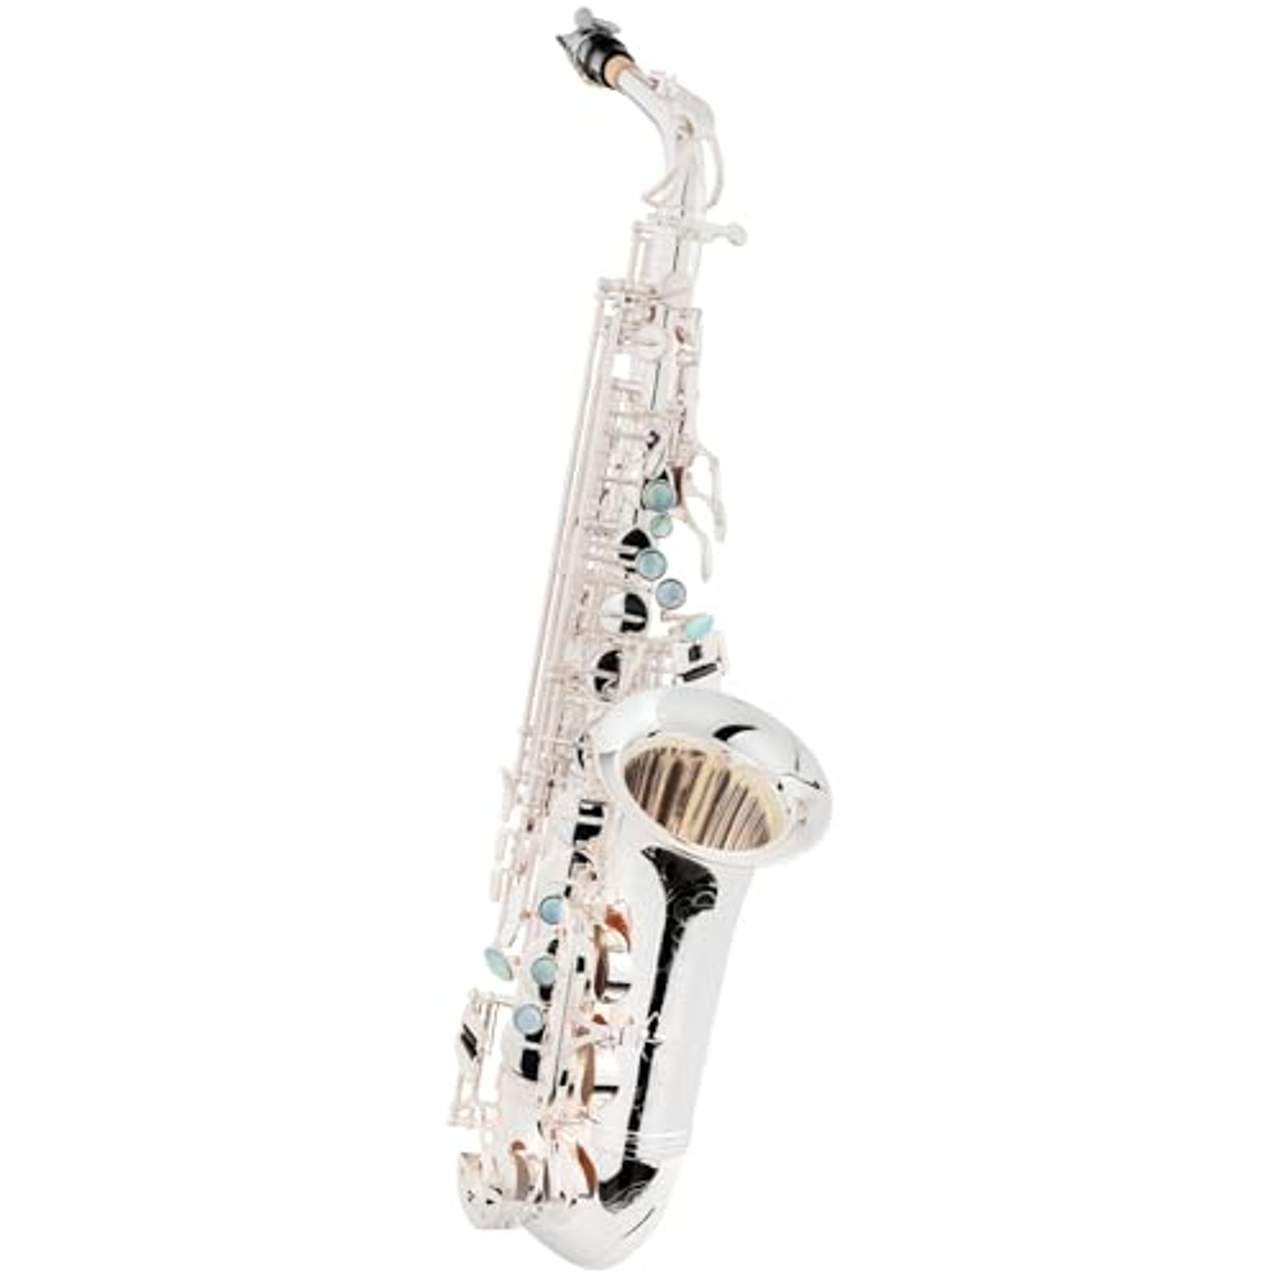 Lechgold LAS-20S Alt-Saxophon aus versilbertem Messing